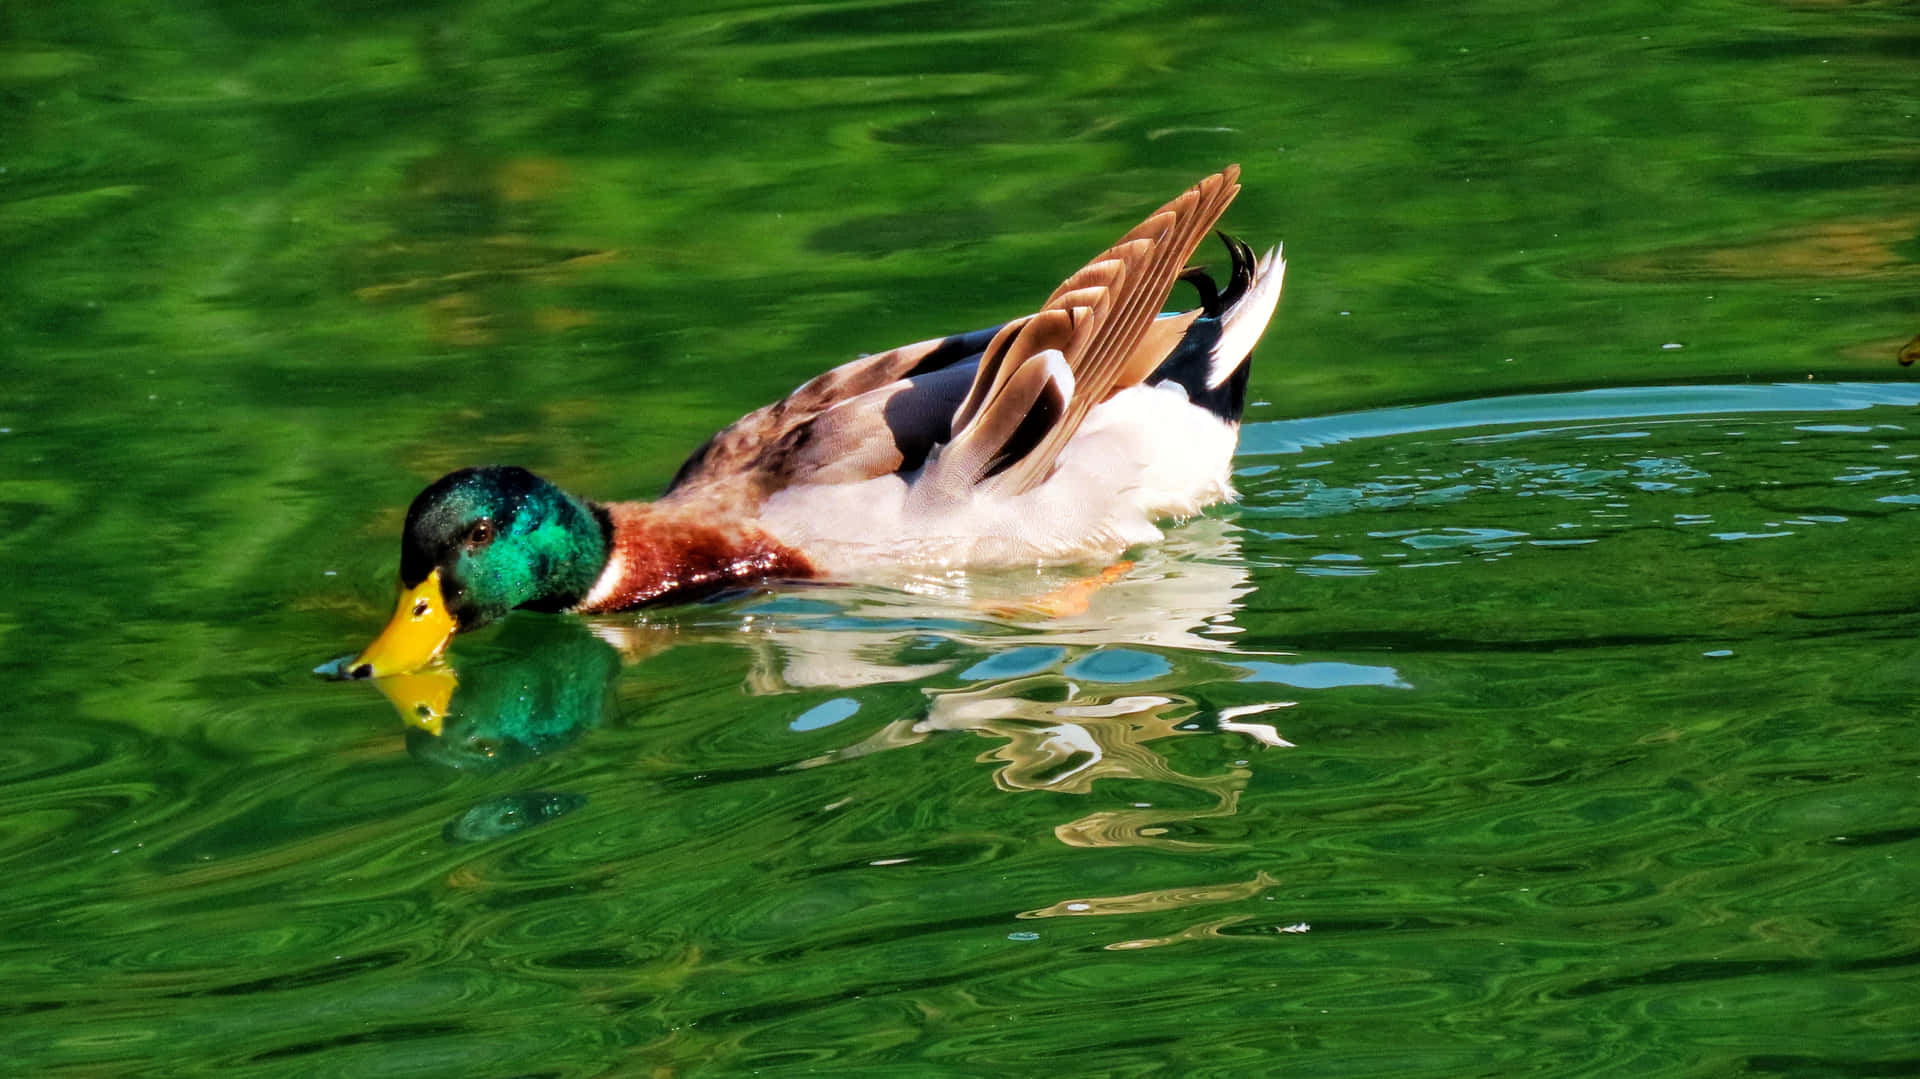 Duck leisurely swimming in a still pond